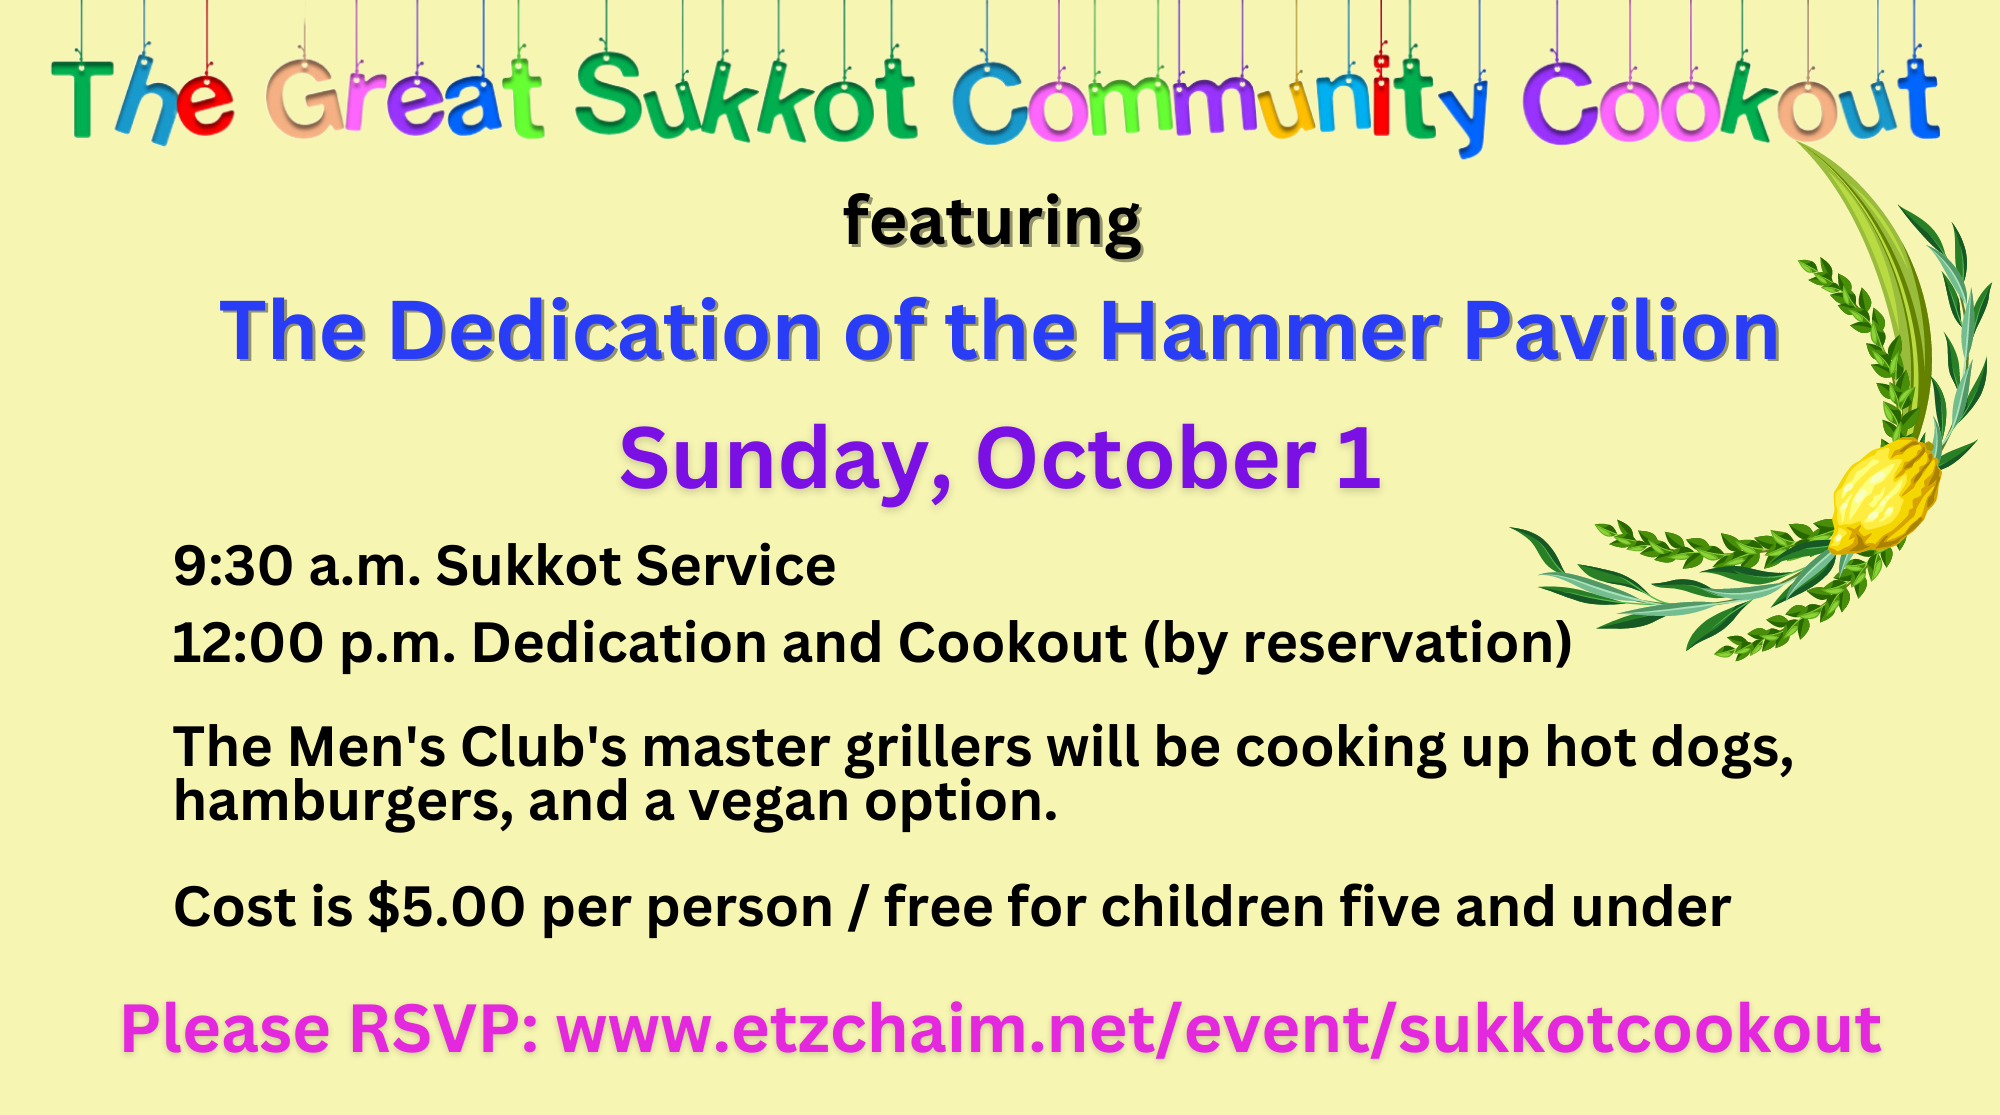 The Great Sukkah Community Cookout